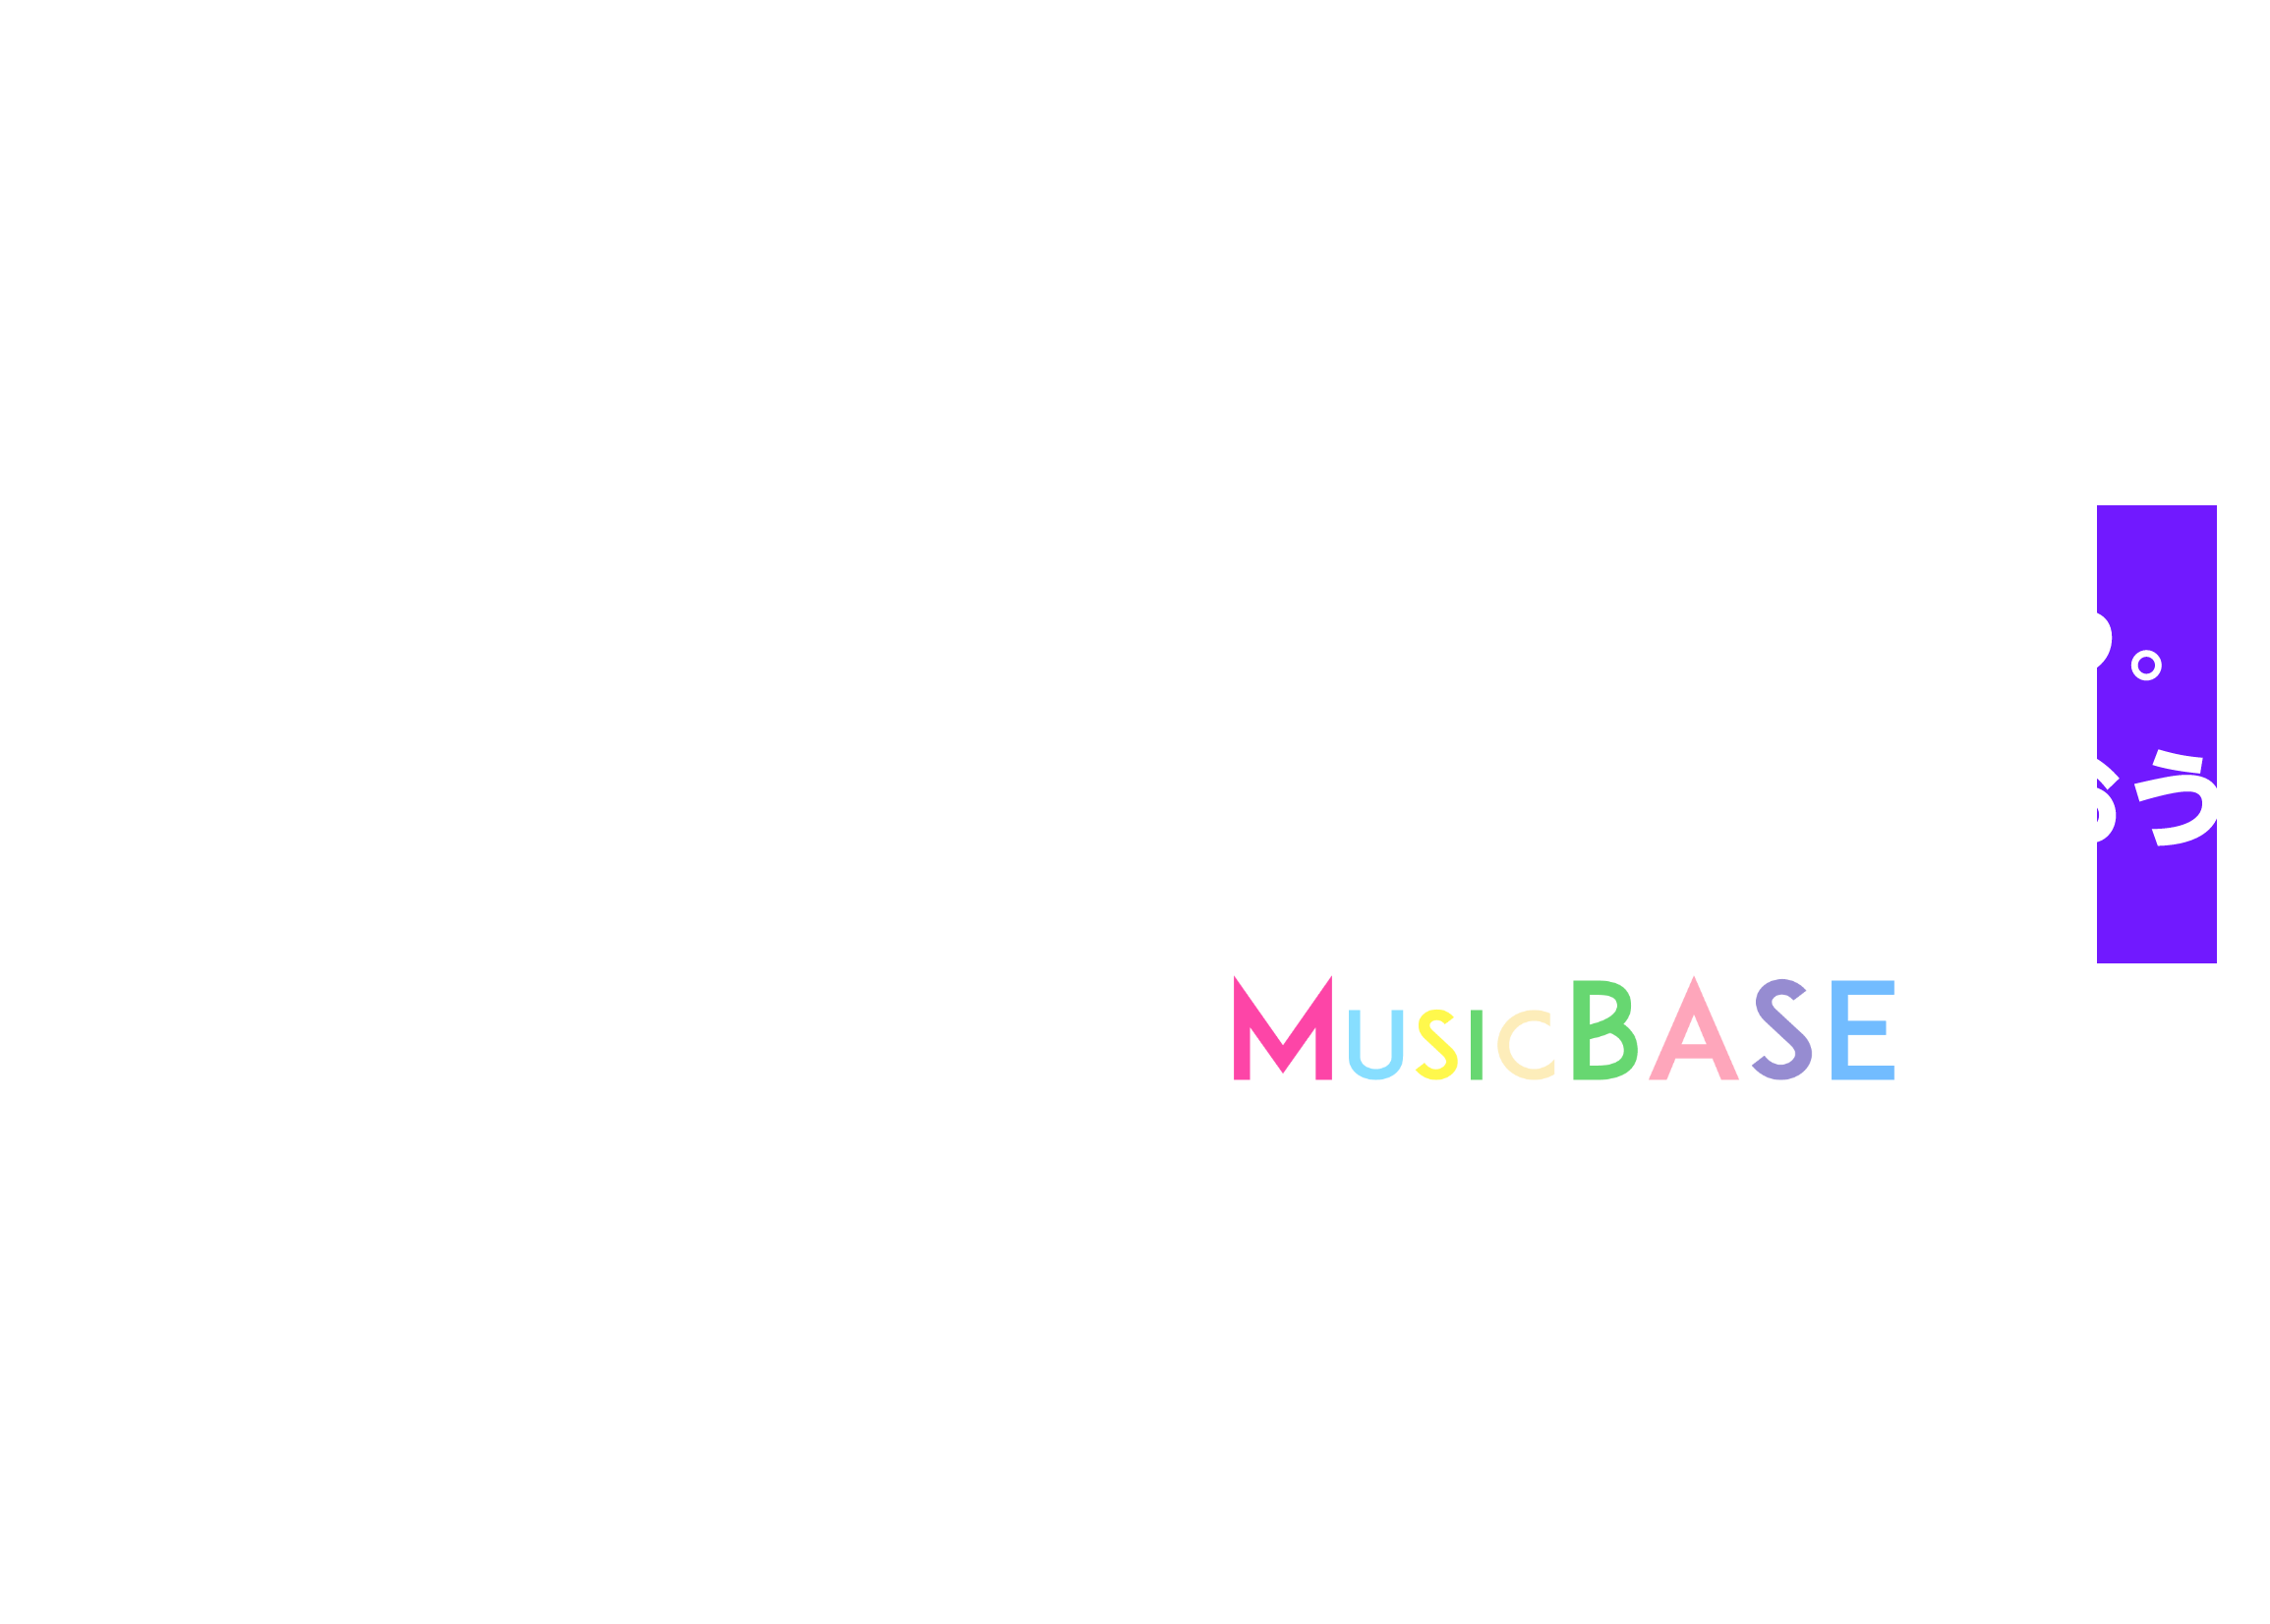 MusicBASE